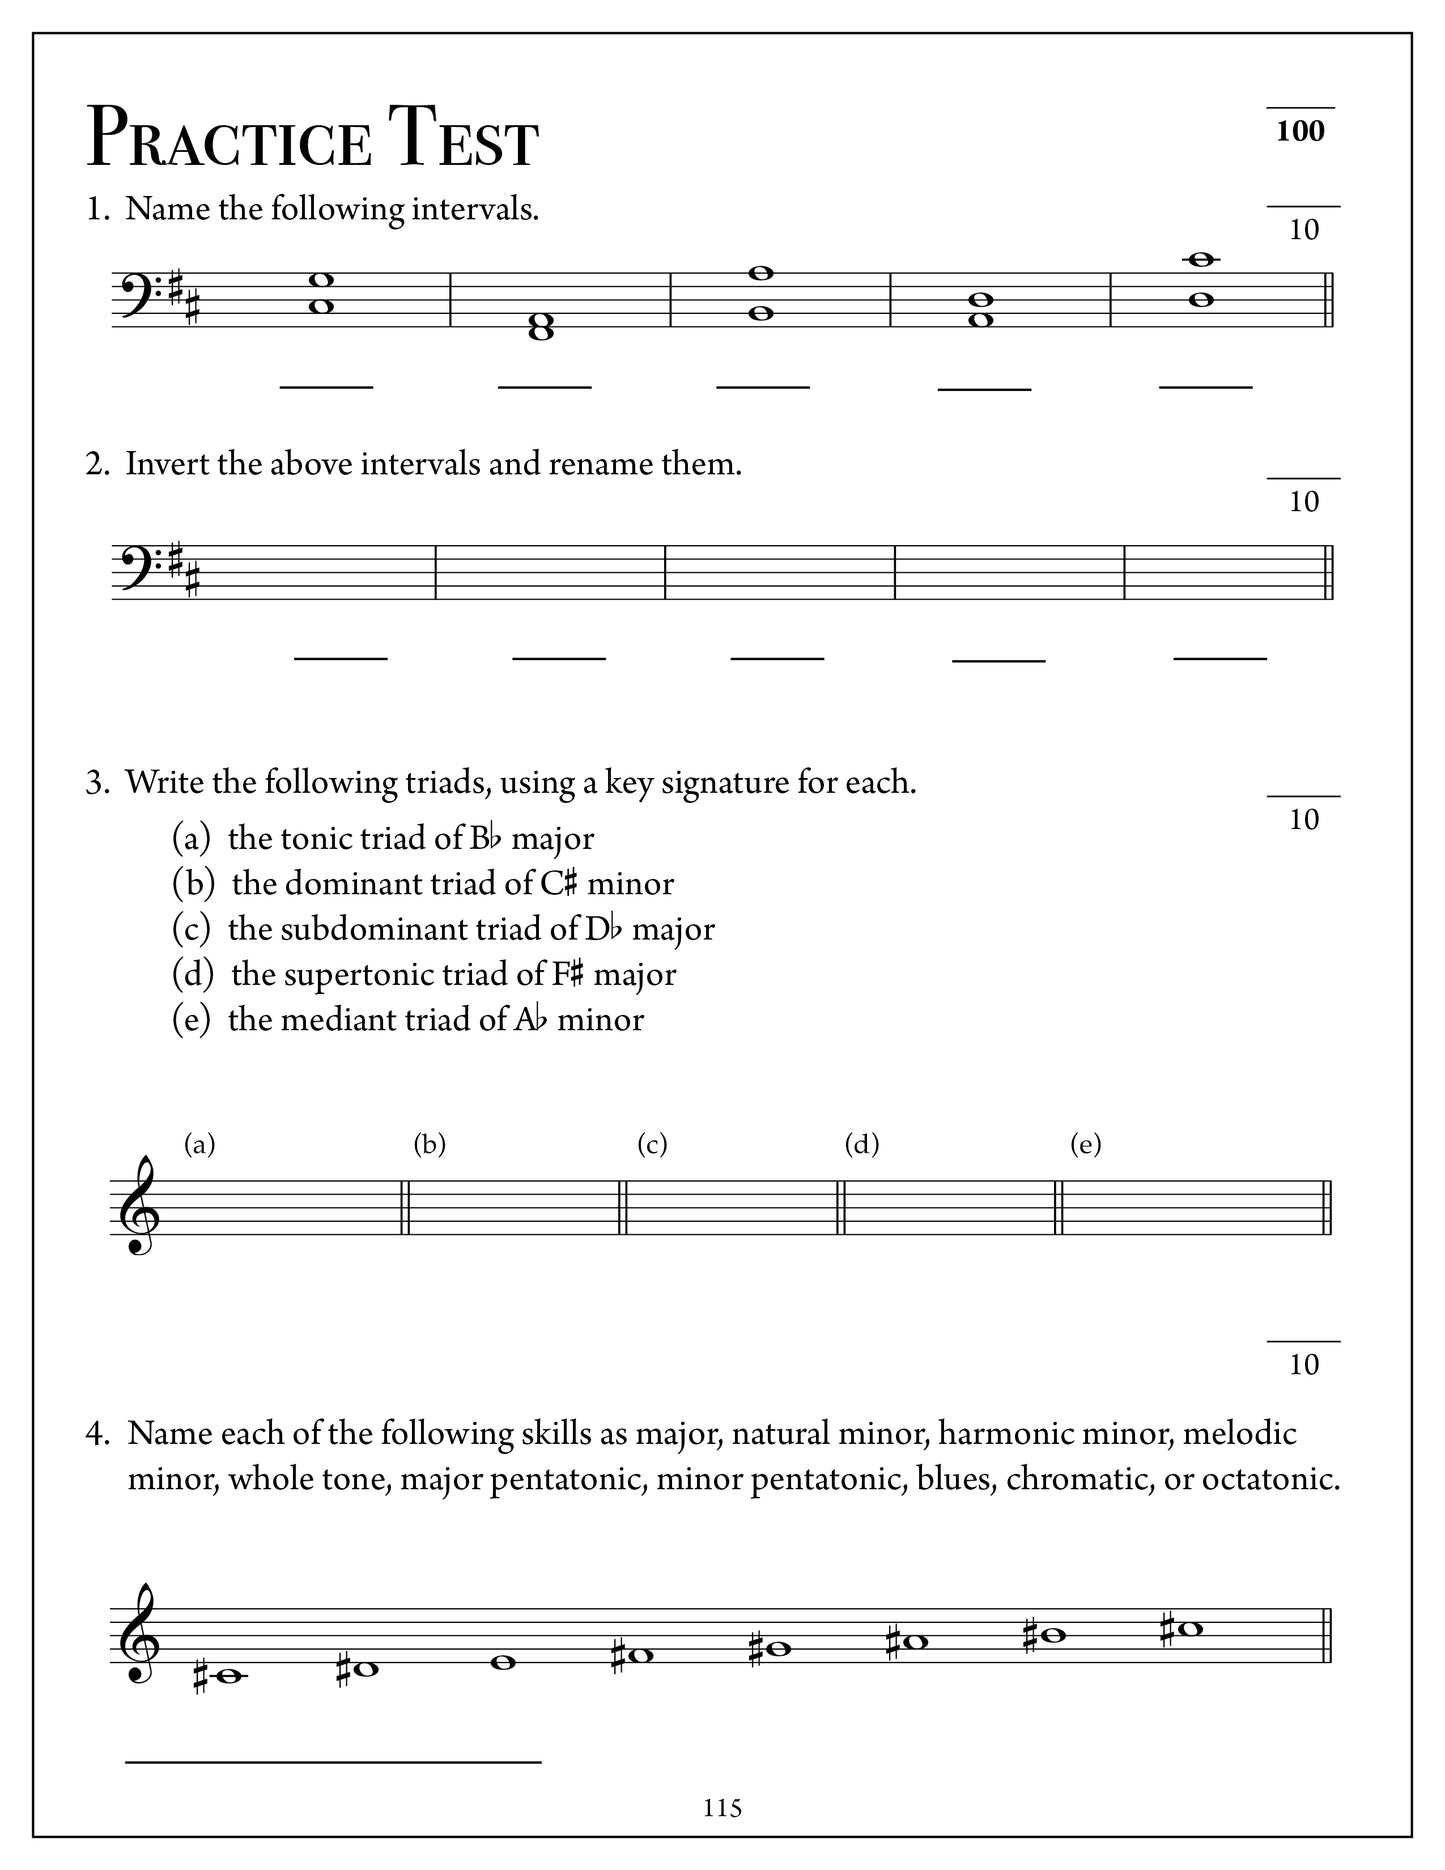 Elementary Music Rudiments Intermediate